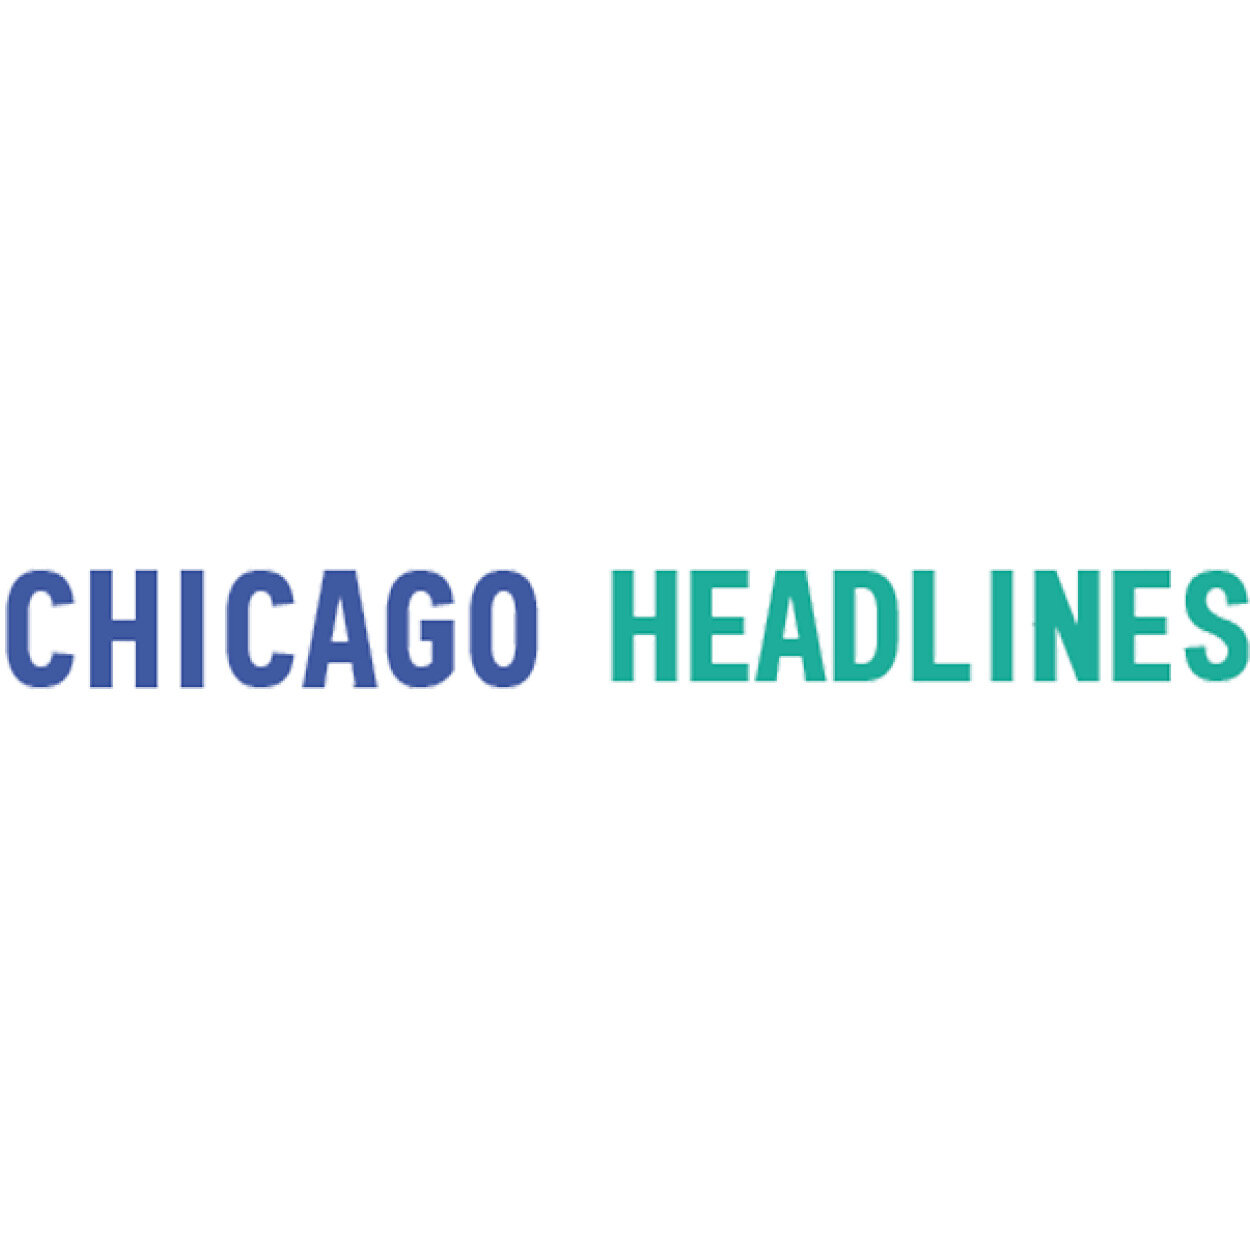 Chicago Headlines Logo - Square.jpg